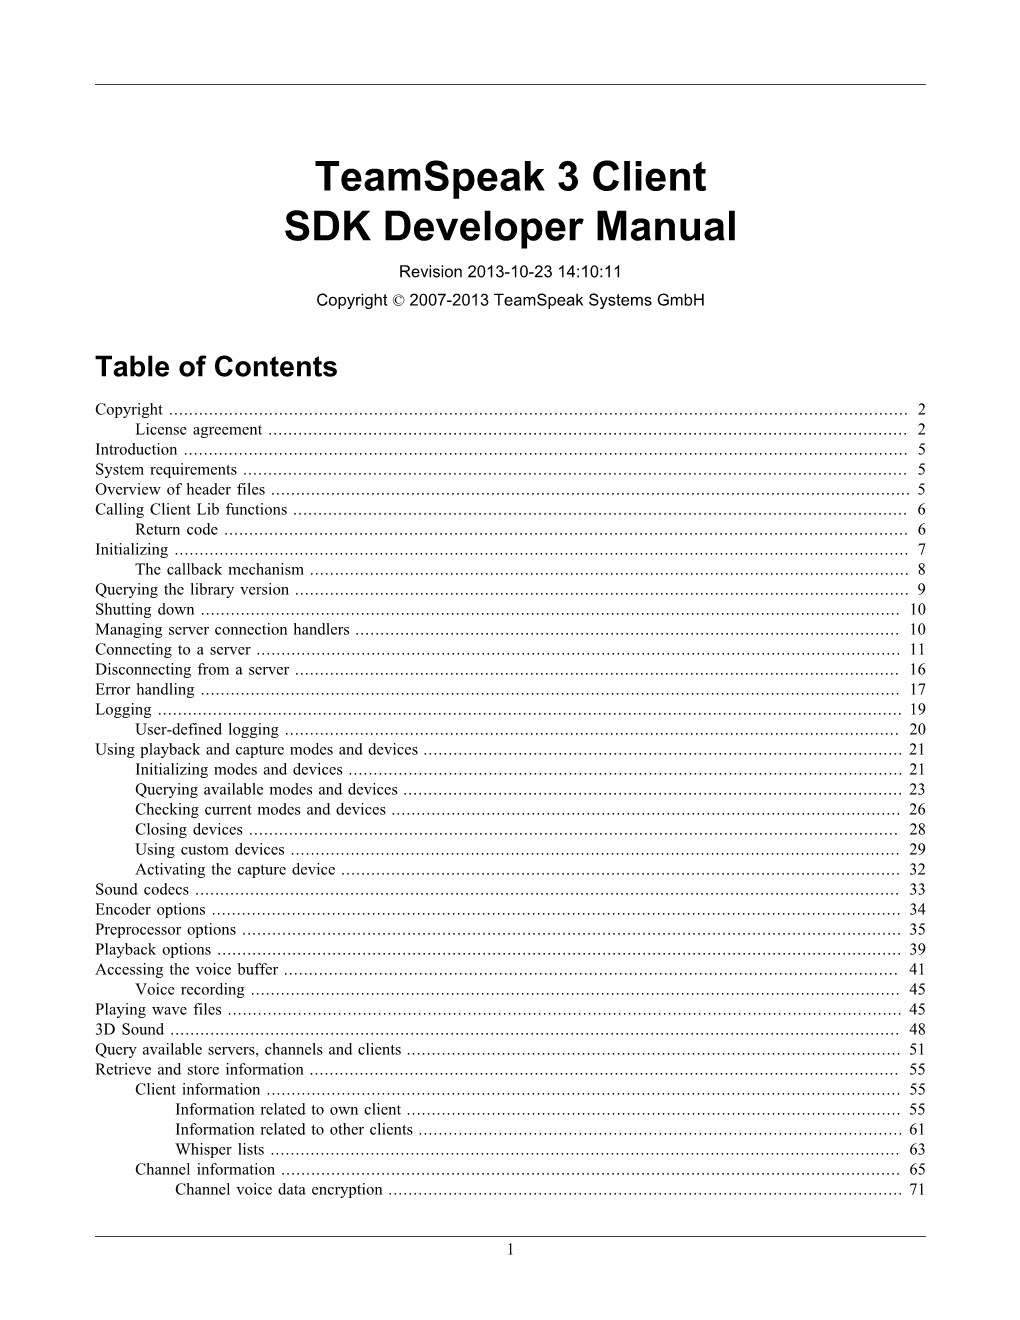 Teamspeak 3 Client SDK Developer Manual Revision 2013-10-23 14:10:11 Copyright © 2007-2013 Teamspeak Systems Gmbh